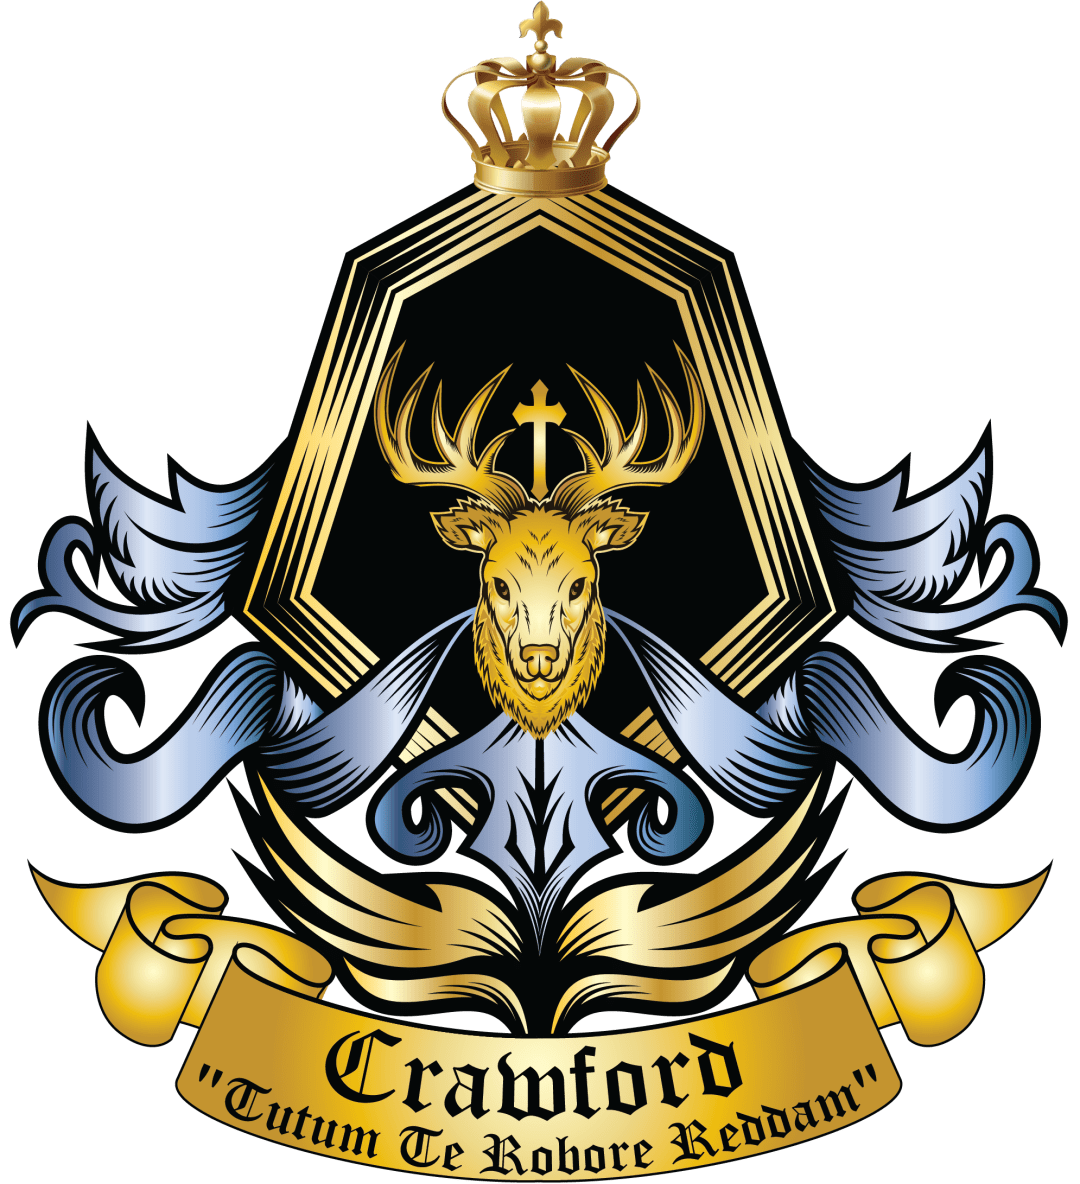 Crawford family emblem